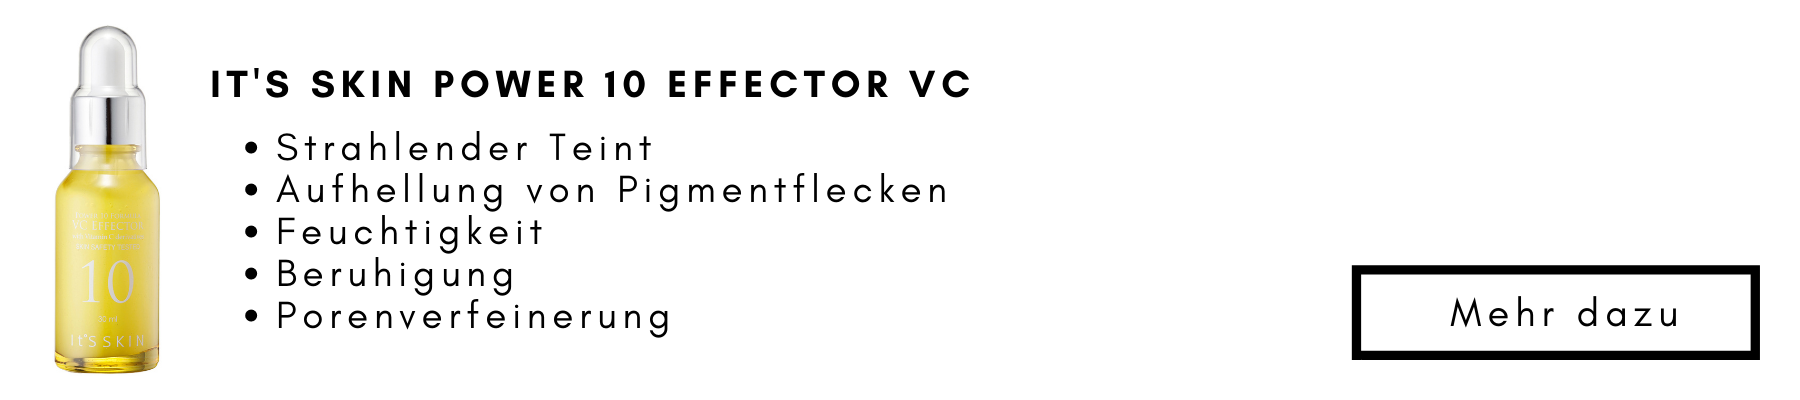 VC-Effector-Bild